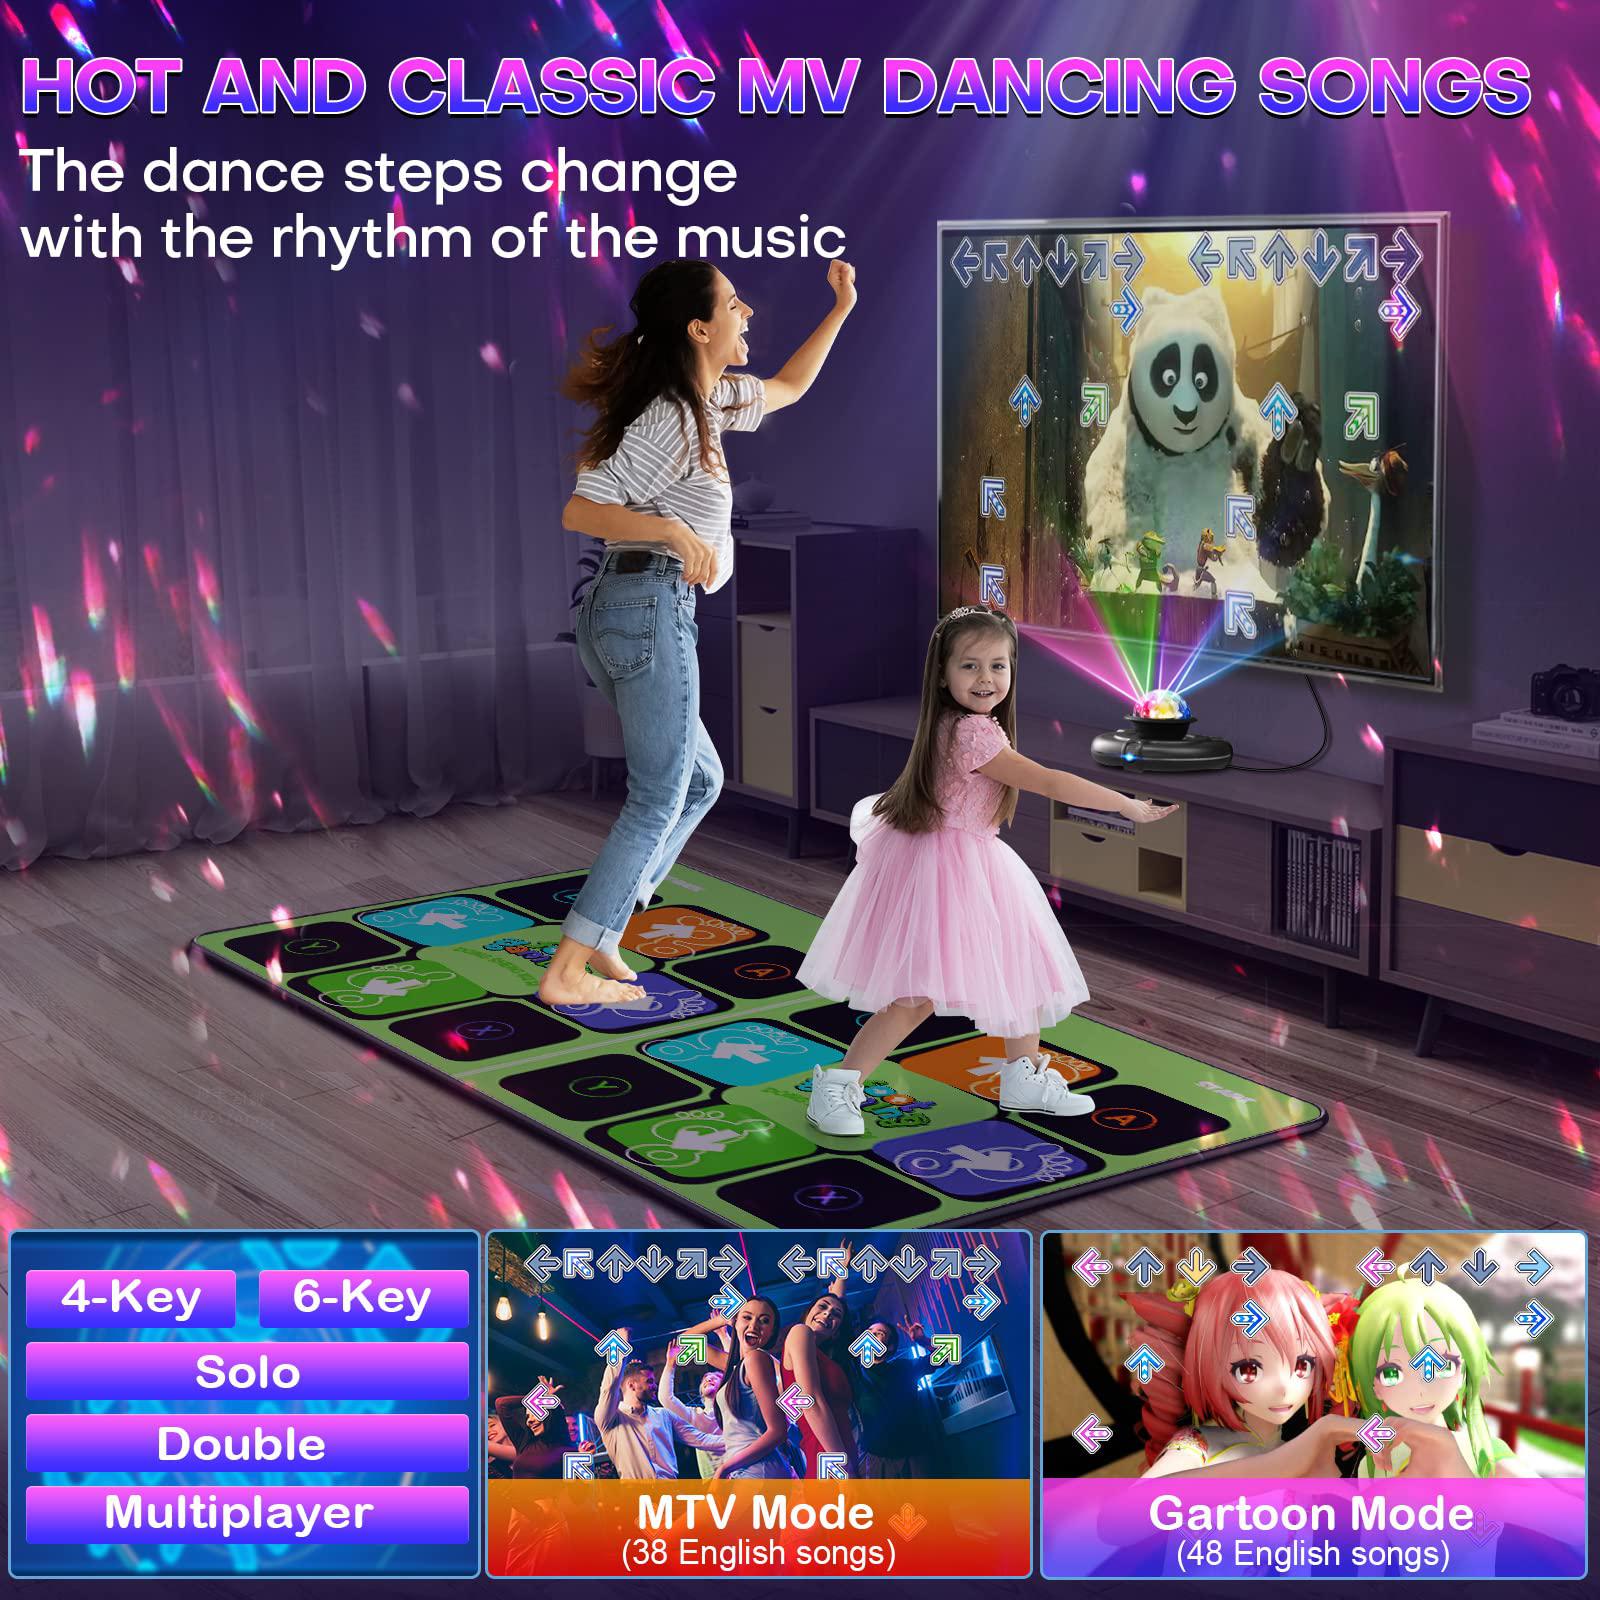 fwfx electronic dance mats - dance mat double game for kids and adults, wireless musical dancing mat (green, 36.6" x65.4")